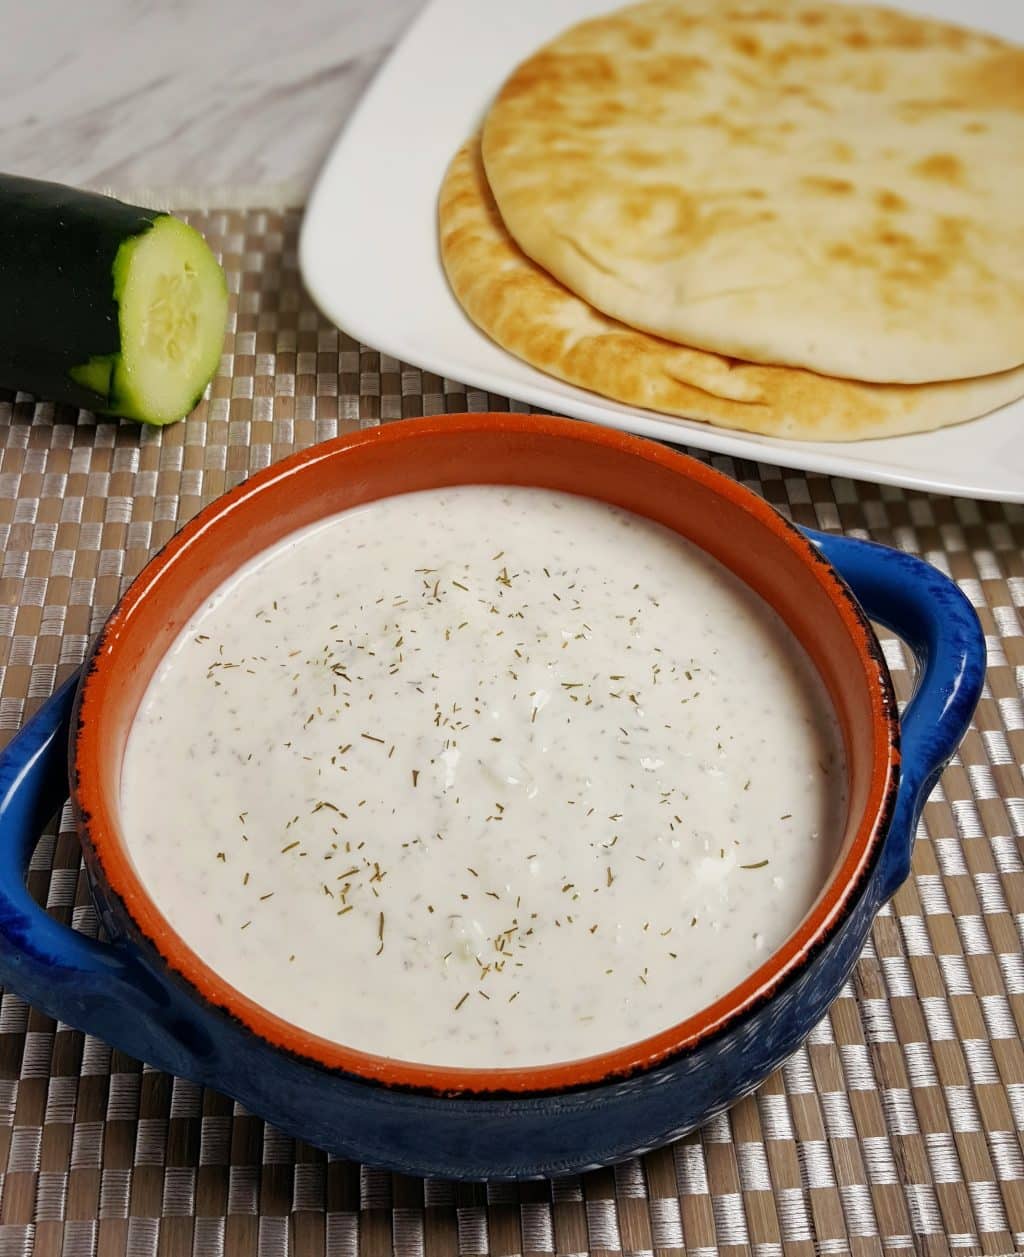 Greek Tzatziki Sauce Recipe {Garlic Cucumber Yogurt Dip}